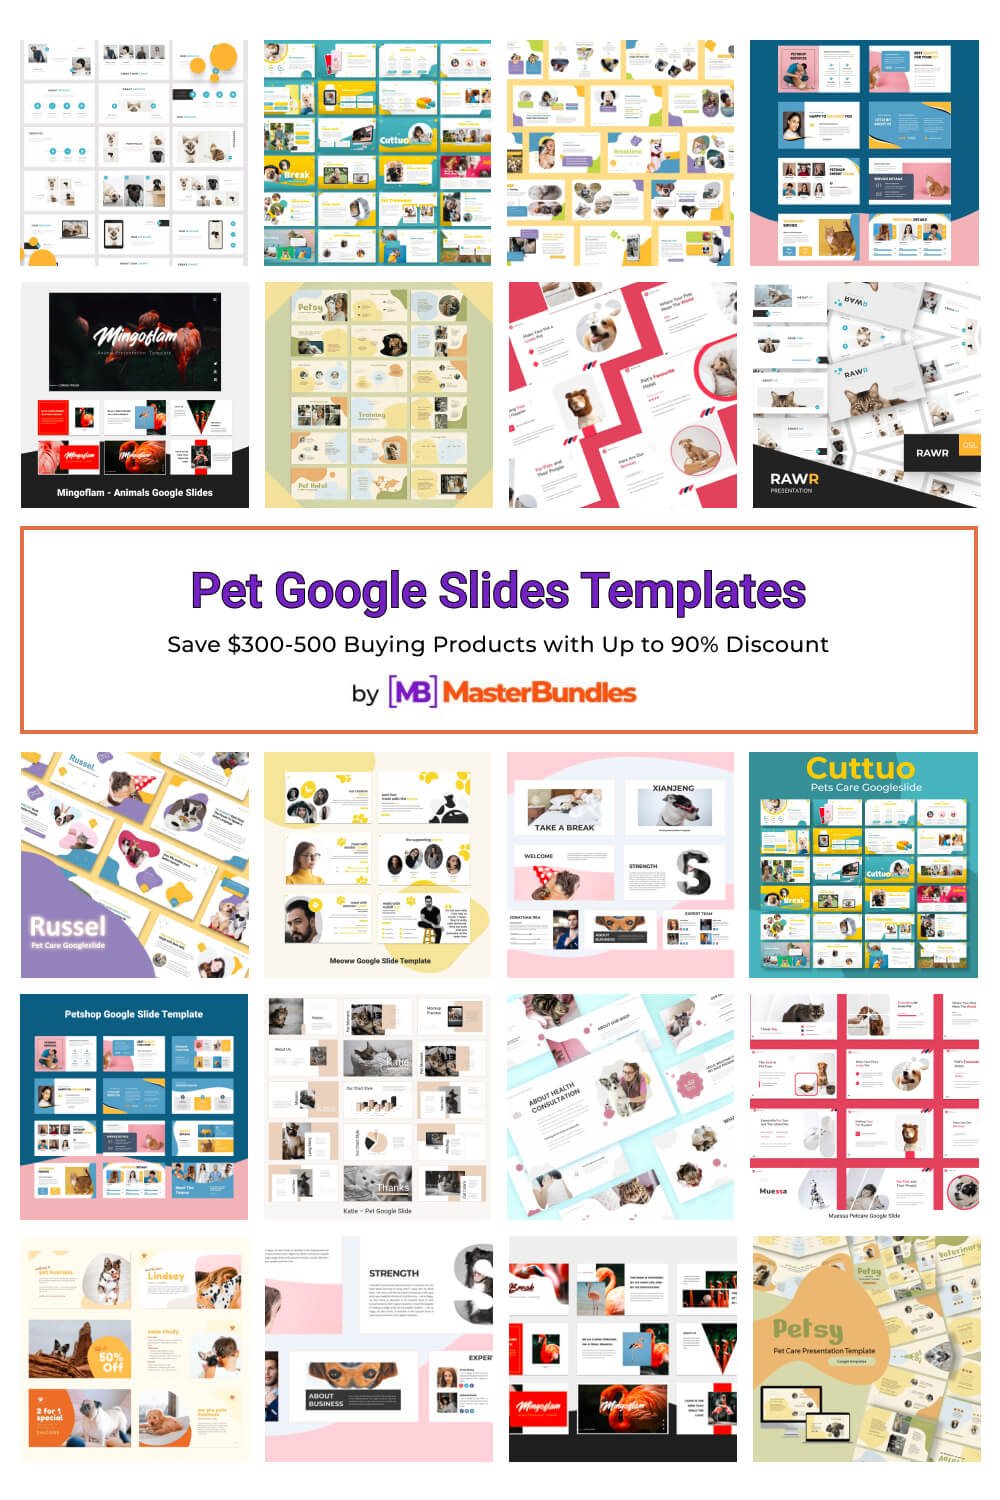 pet google slides templates pinterest image.